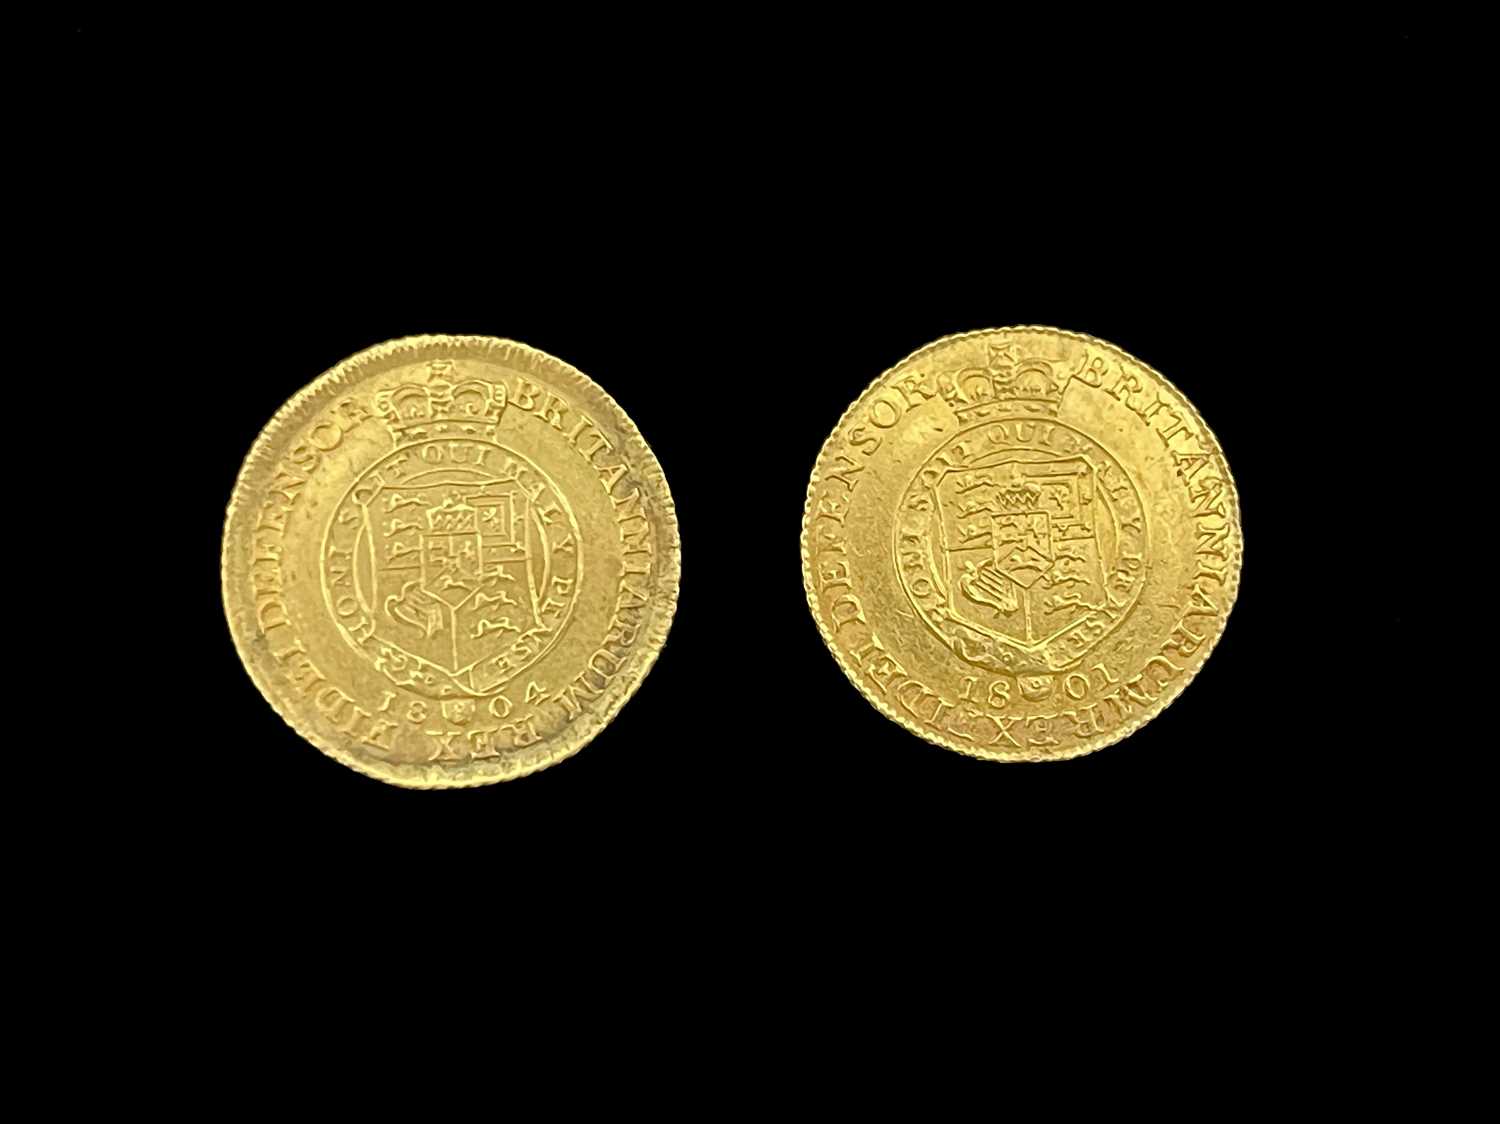 Guinea, George III half guineas, 1801 and 1804 (2) - Image 2 of 2